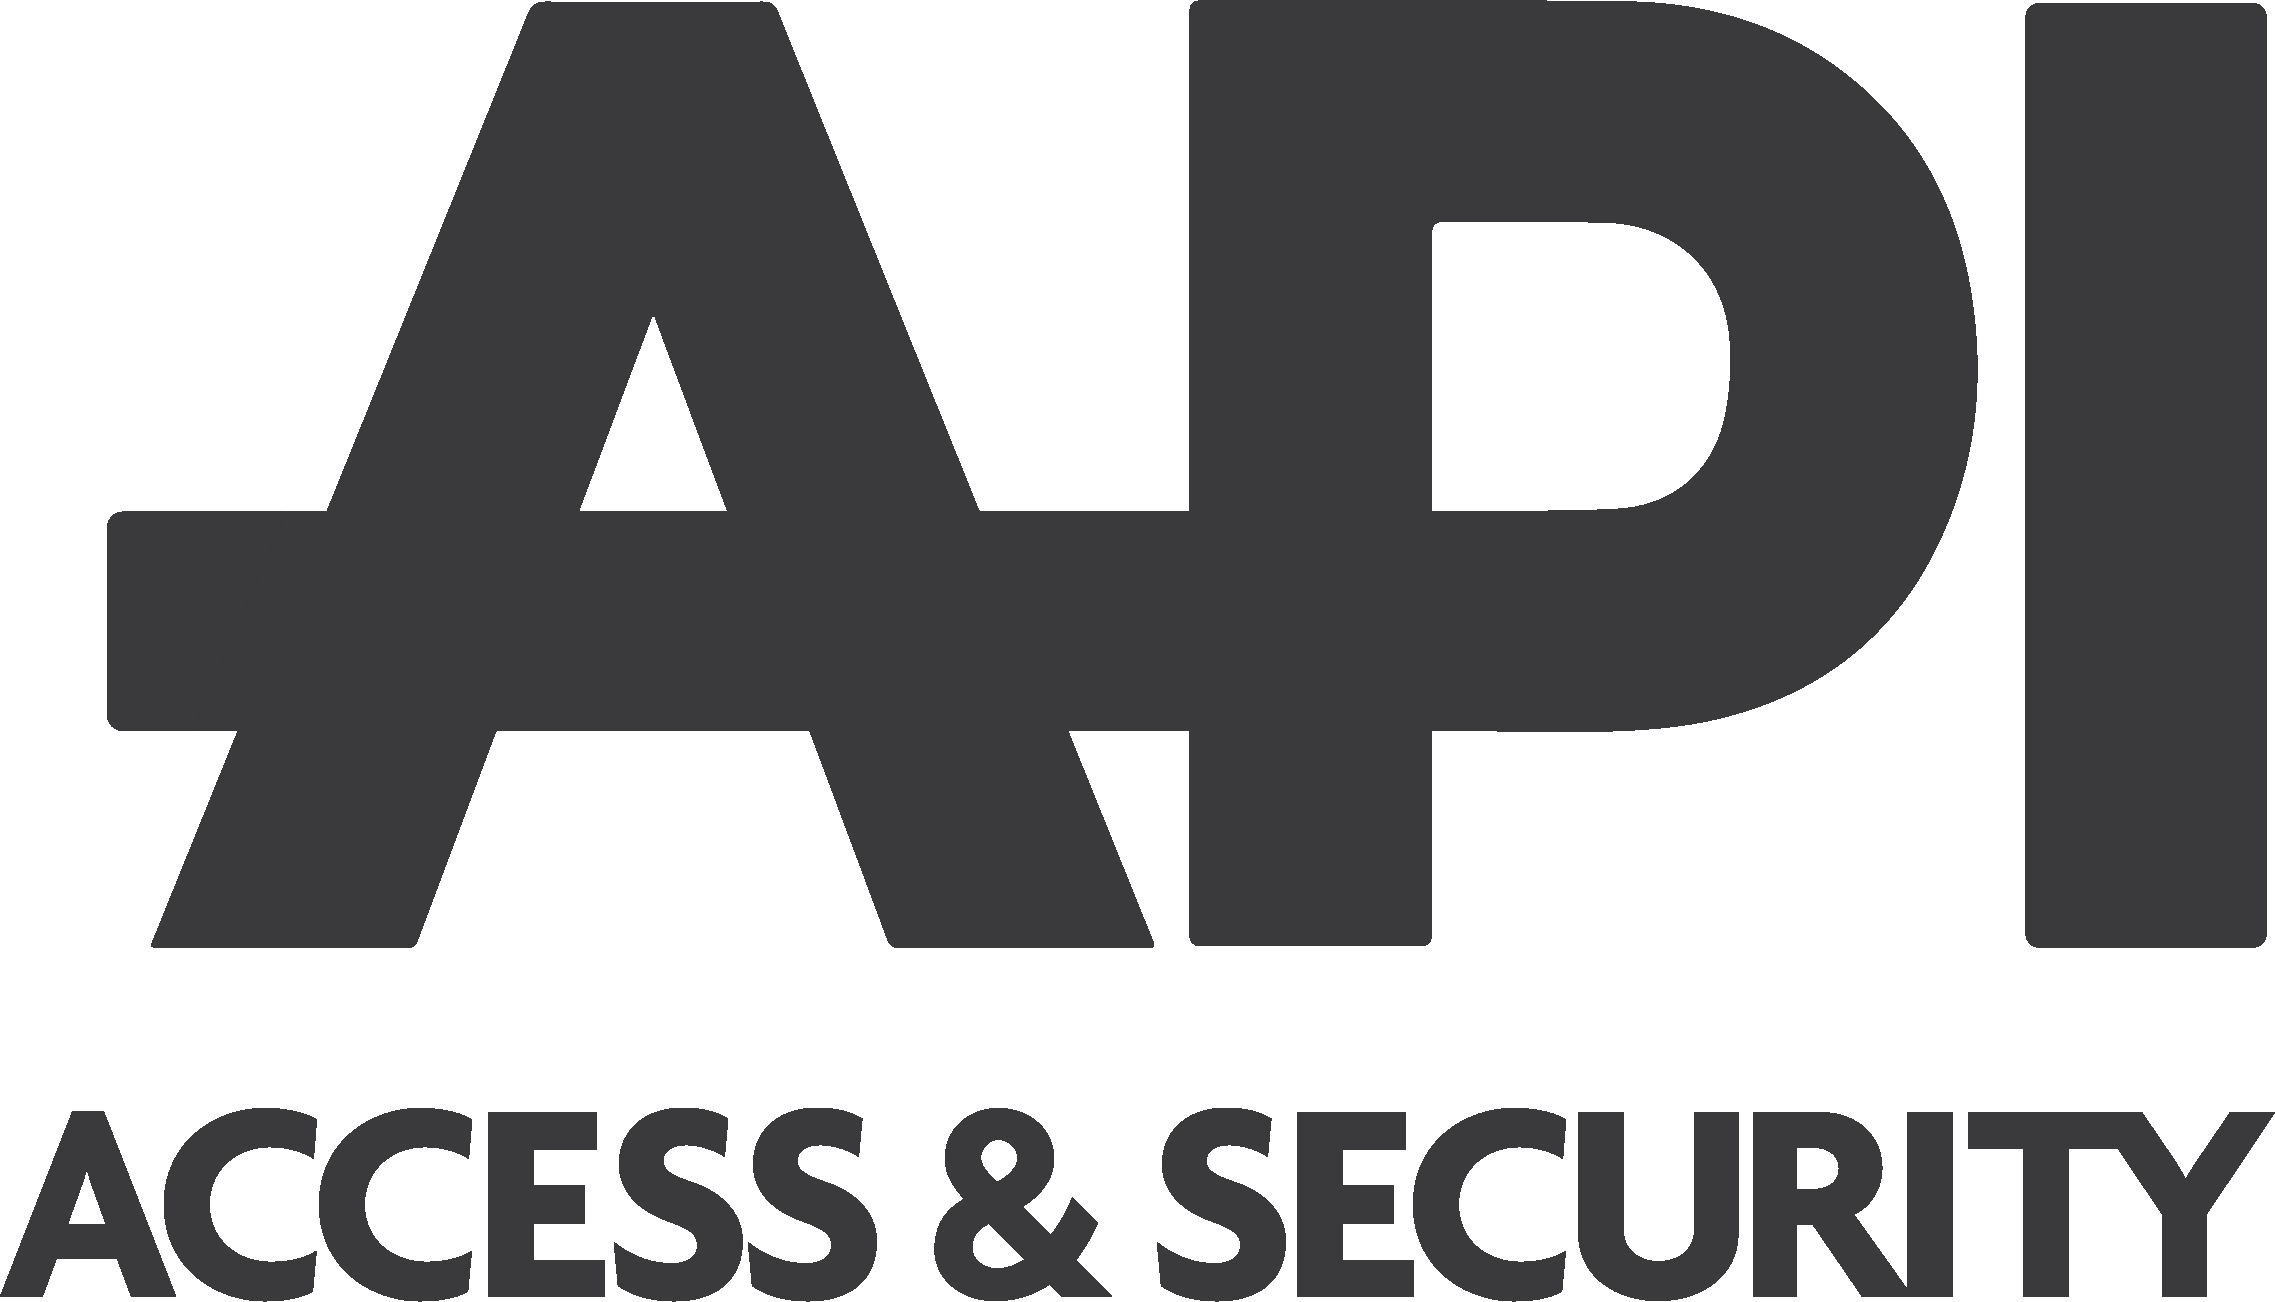 API access and security